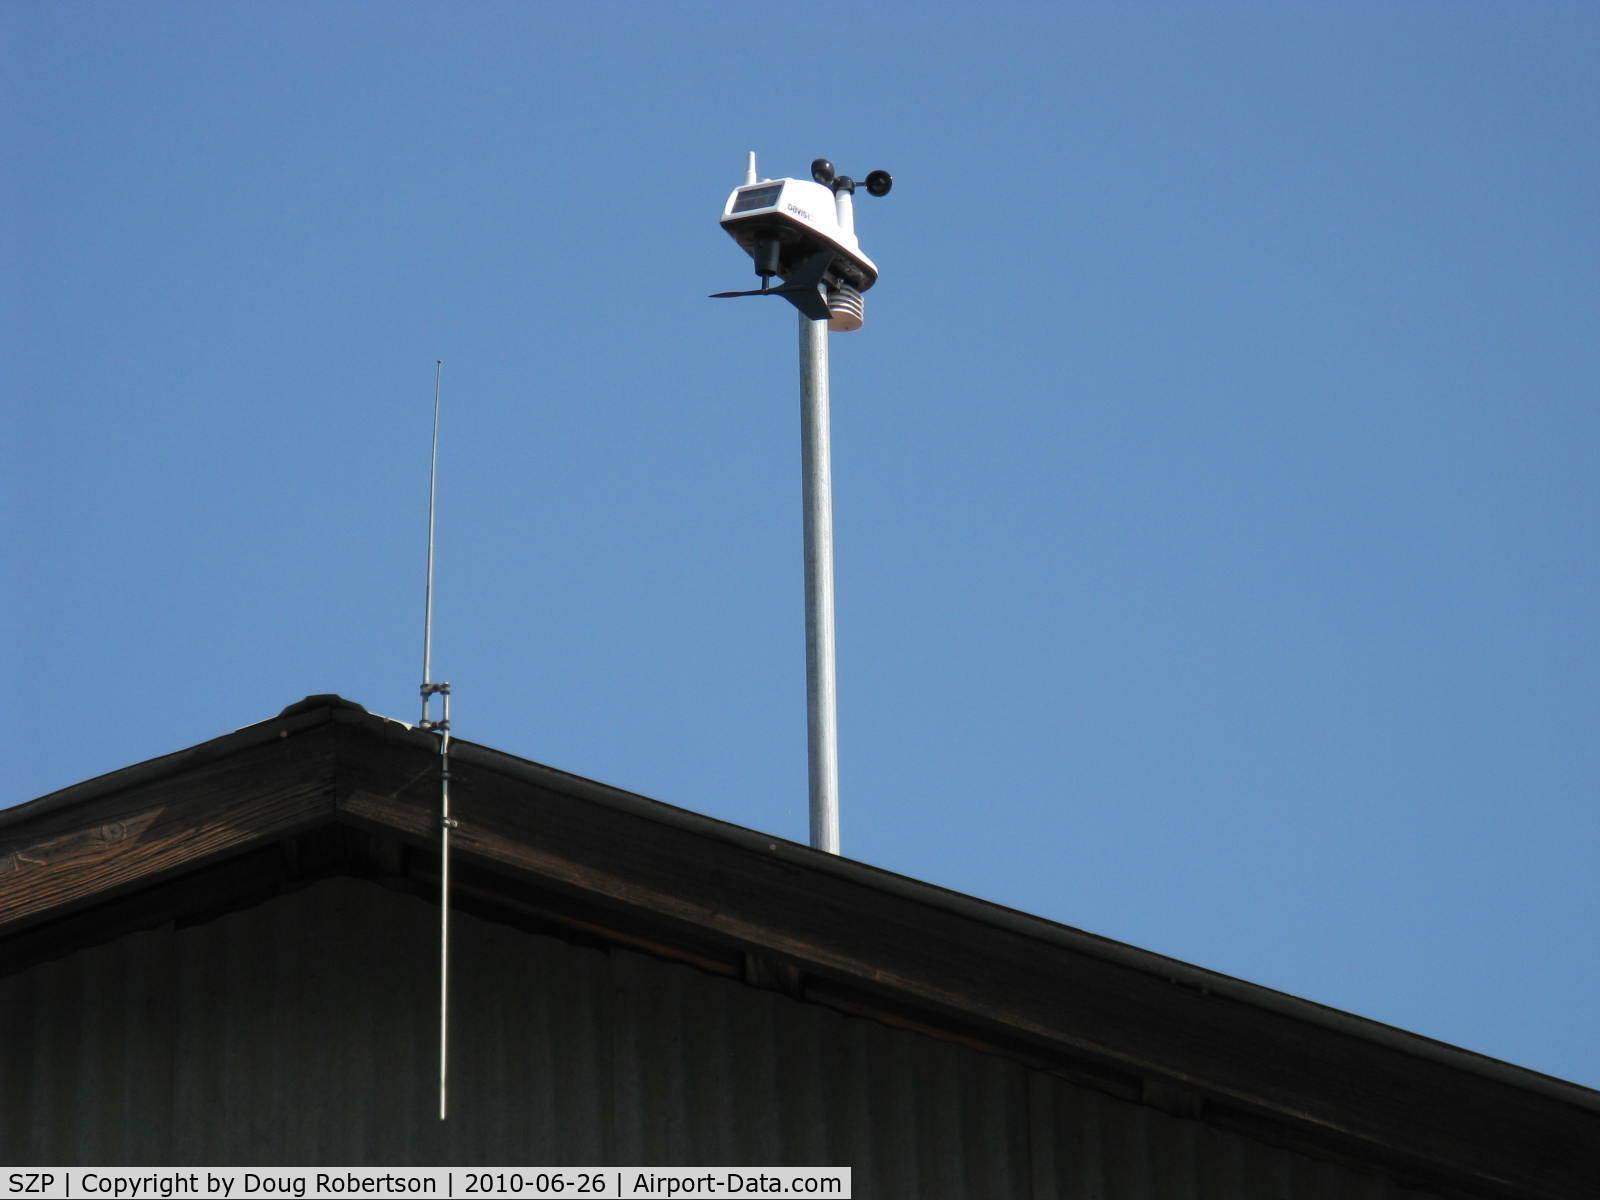 Santa Paula Airport (SZP) - Weather Station multi-sensor/transmitter on hangar-solar powered